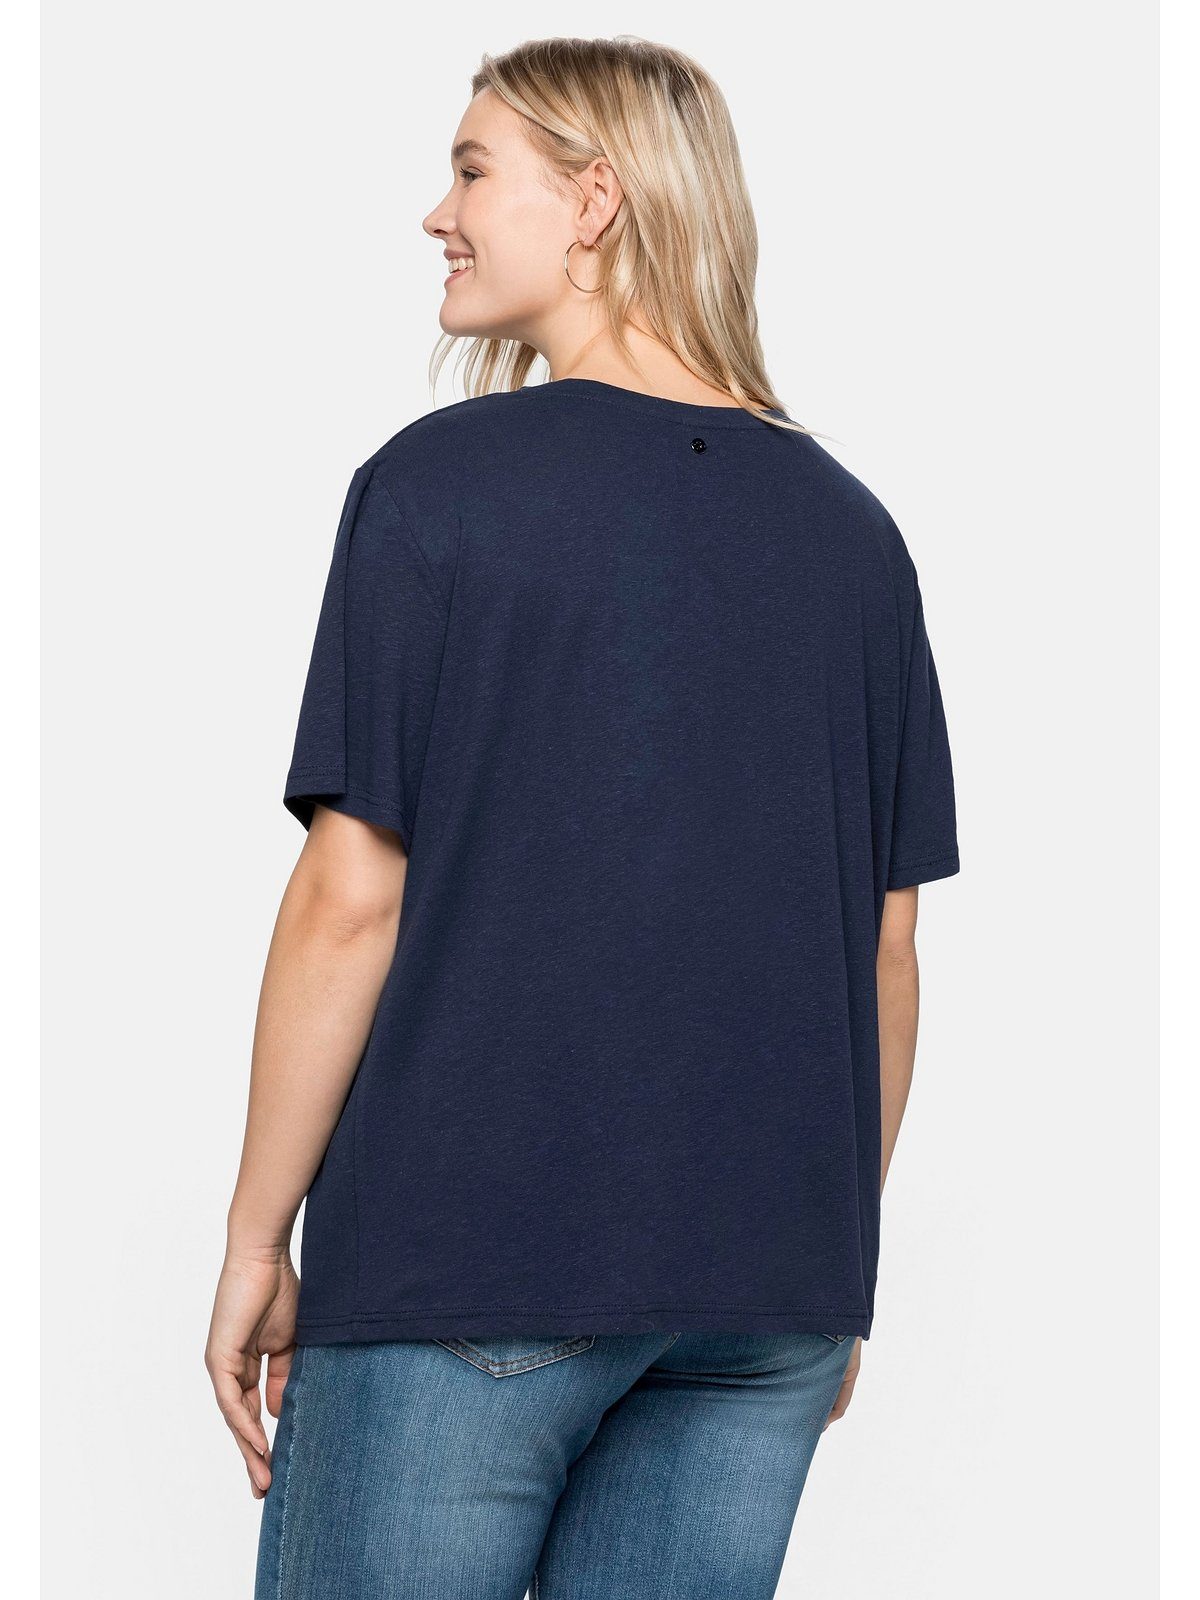 Große T-Shirt aus Sheego edlem Größen Leinen-Viskose-Mix marine